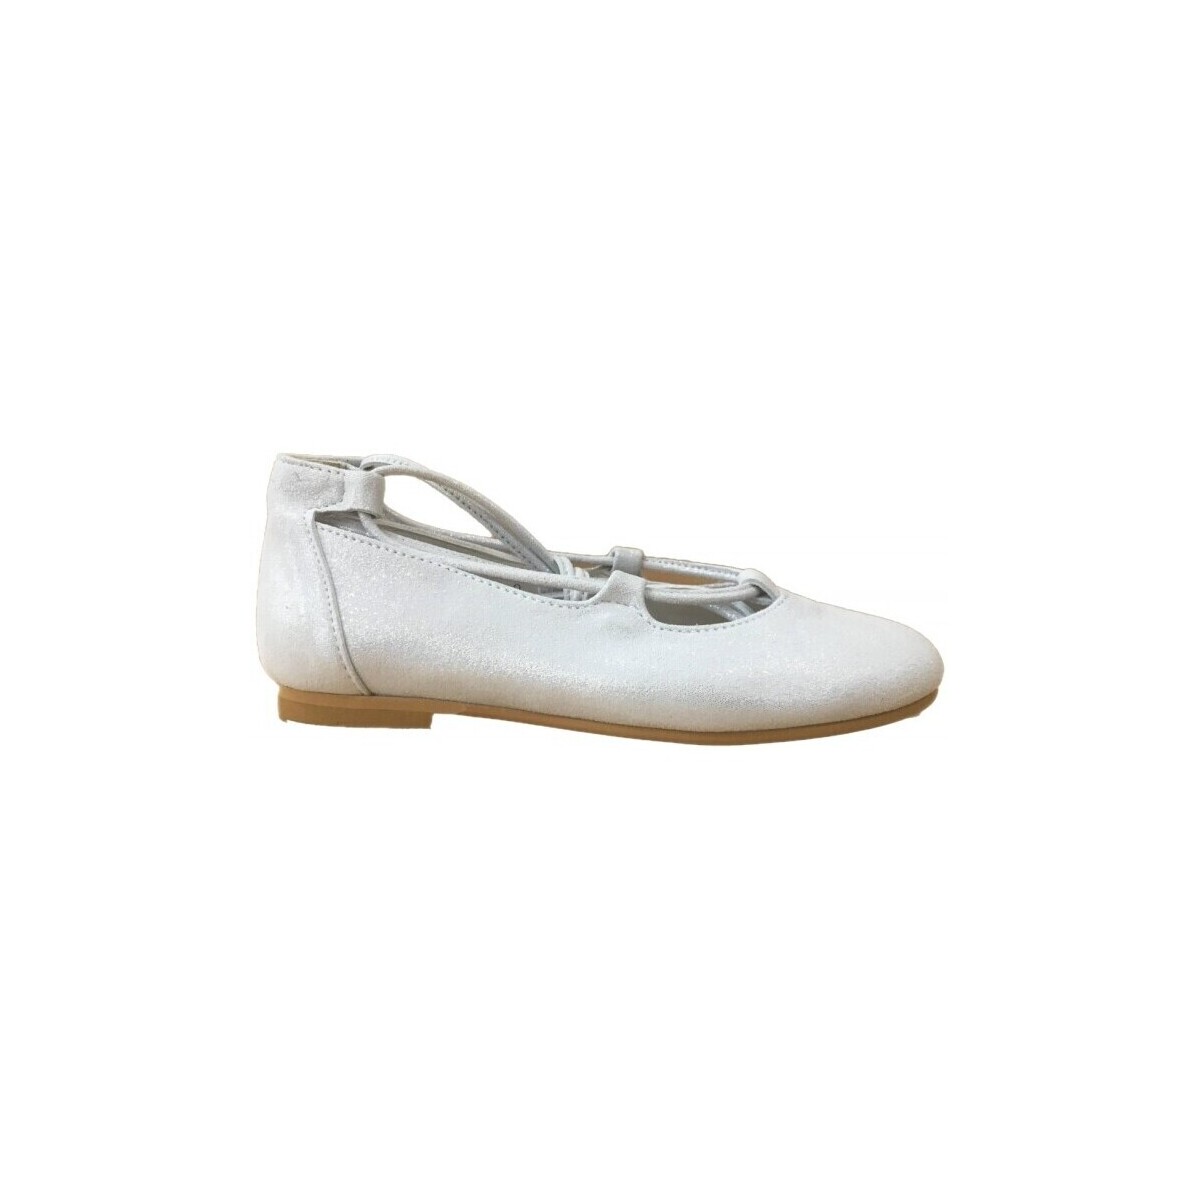 Zapatos Niña Bailarinas-manoletinas Colores 26227-18 Blanco